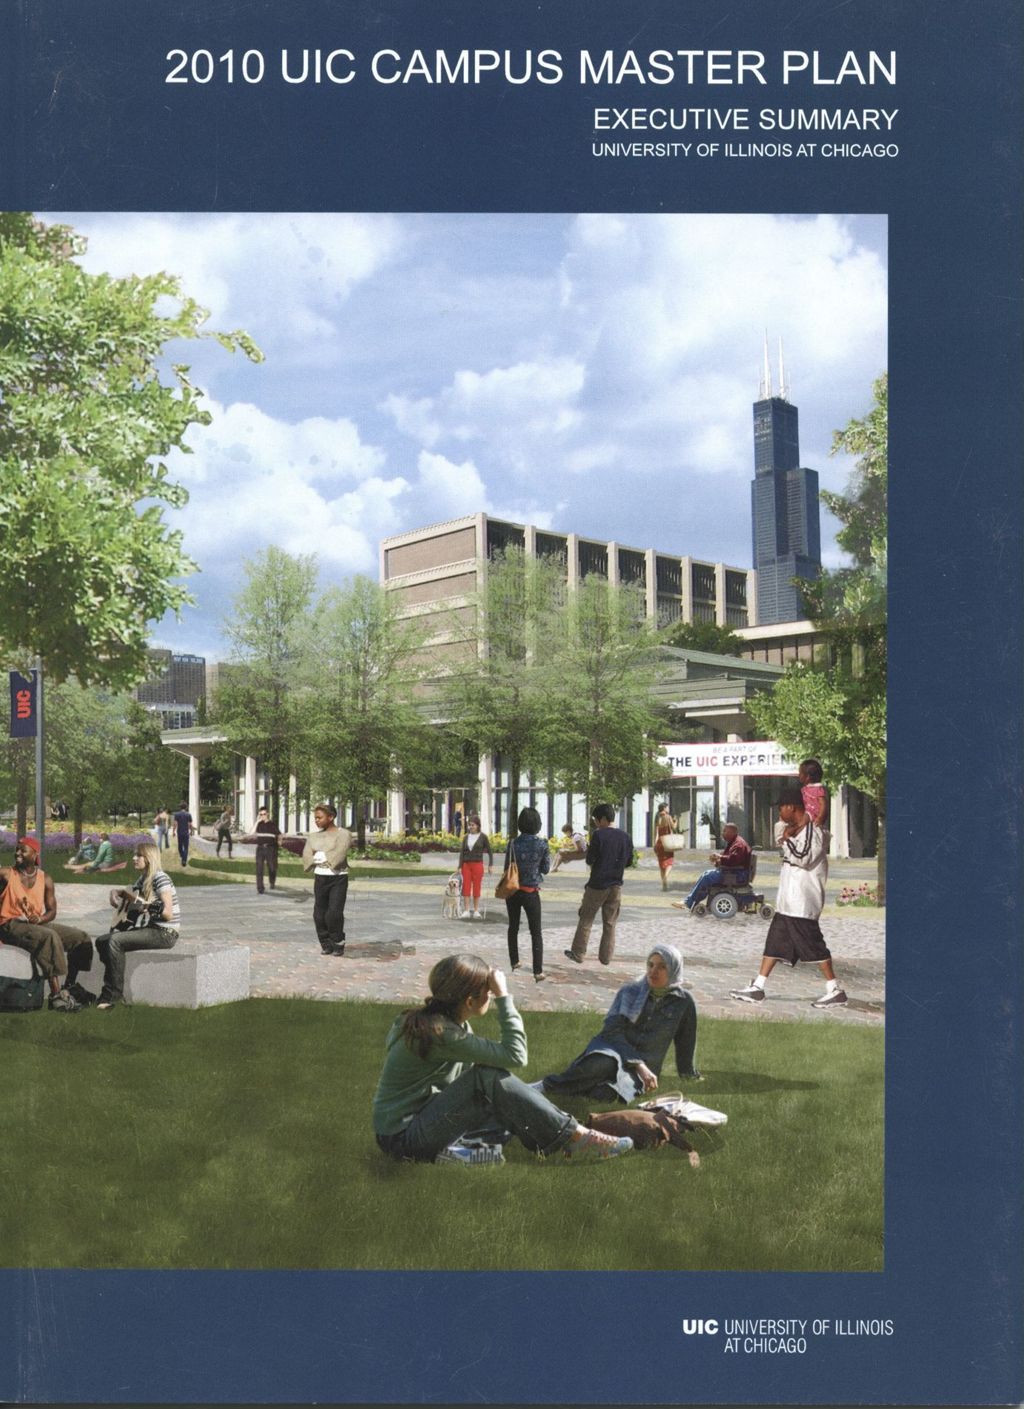 Miniature of 2010 UIC Campus Master Plan - Executive Summary, University of Illinois at Chicago